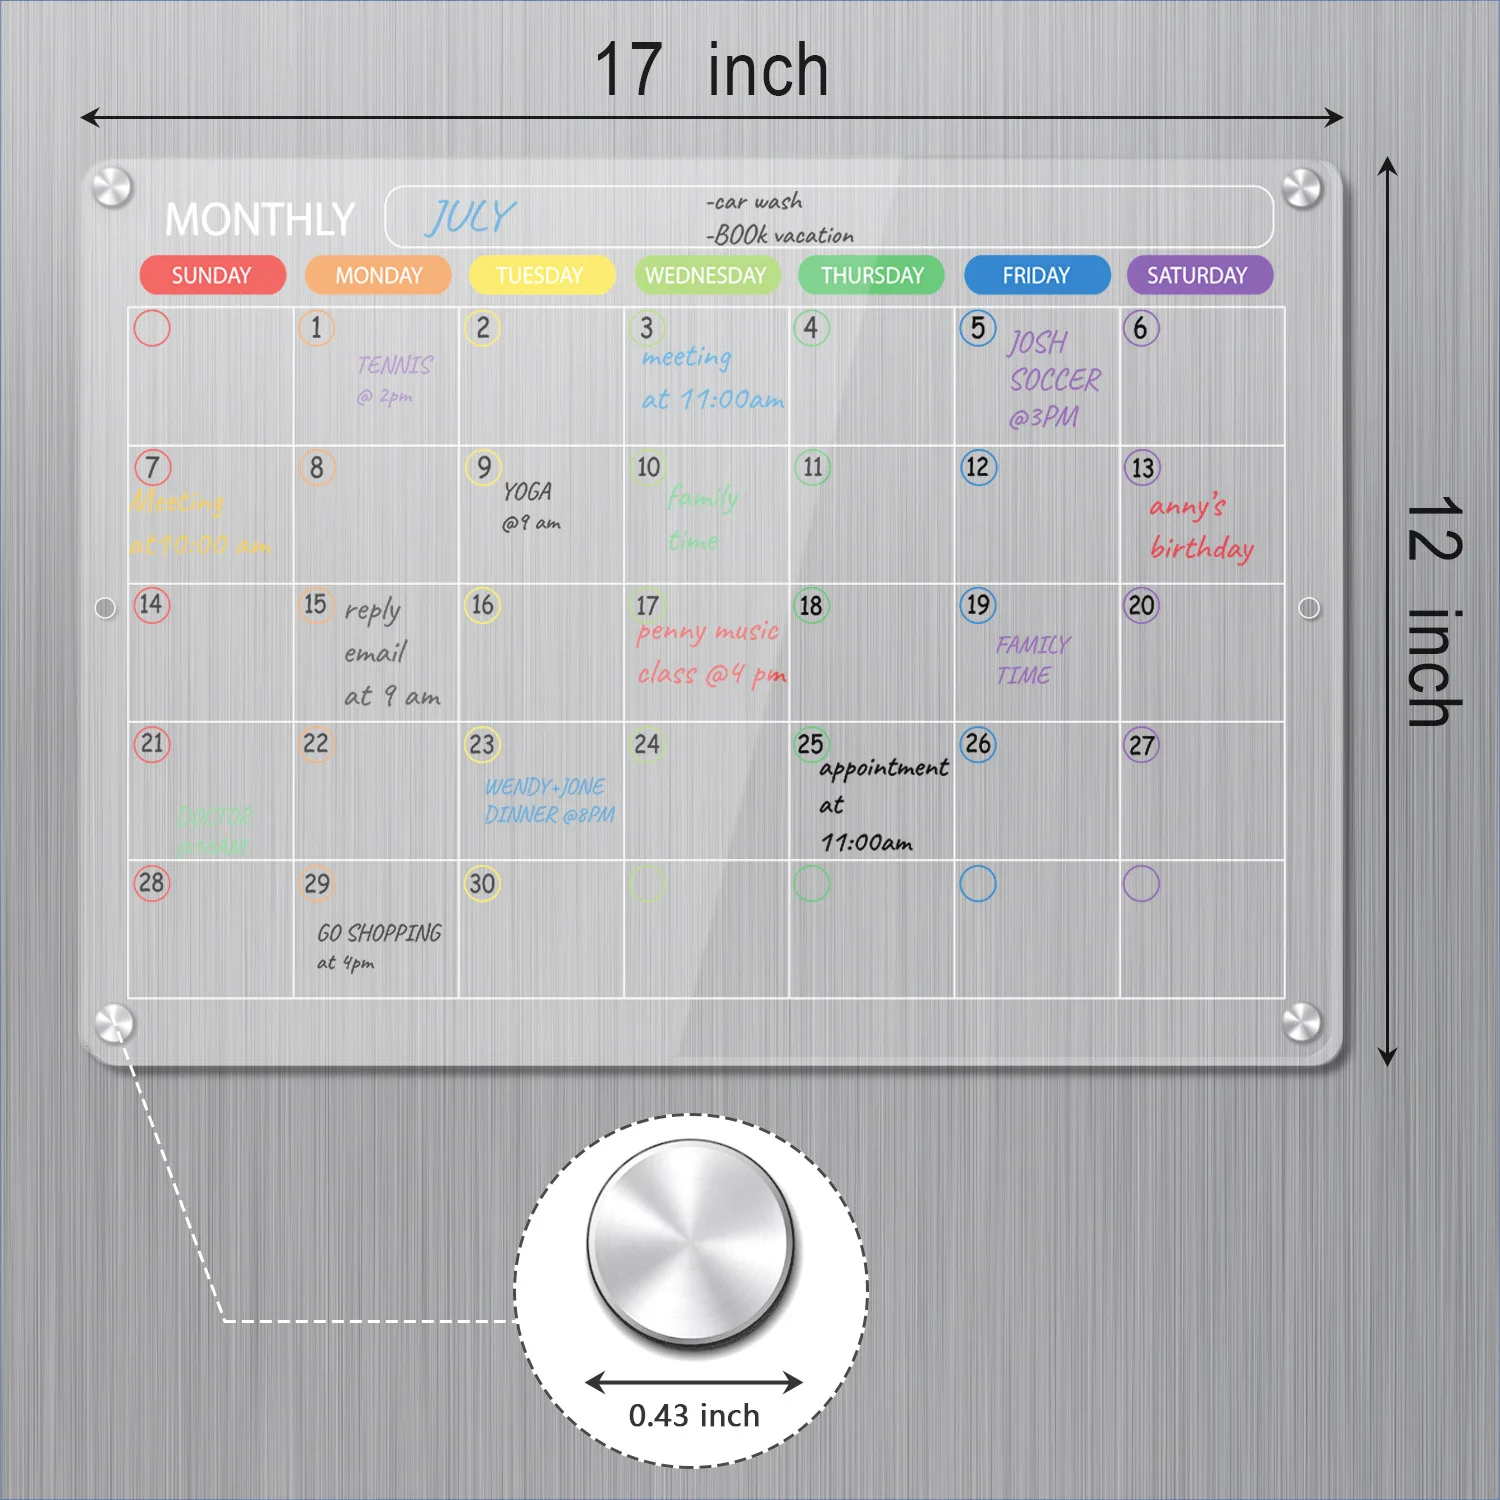 Acrylic Calendar for Fridge 12x 12 Vertical Magnetic Calendar for Fridge  Clear Magnetic Dry Erase Board for Fridge Vertical Clear Magnetic Calendar